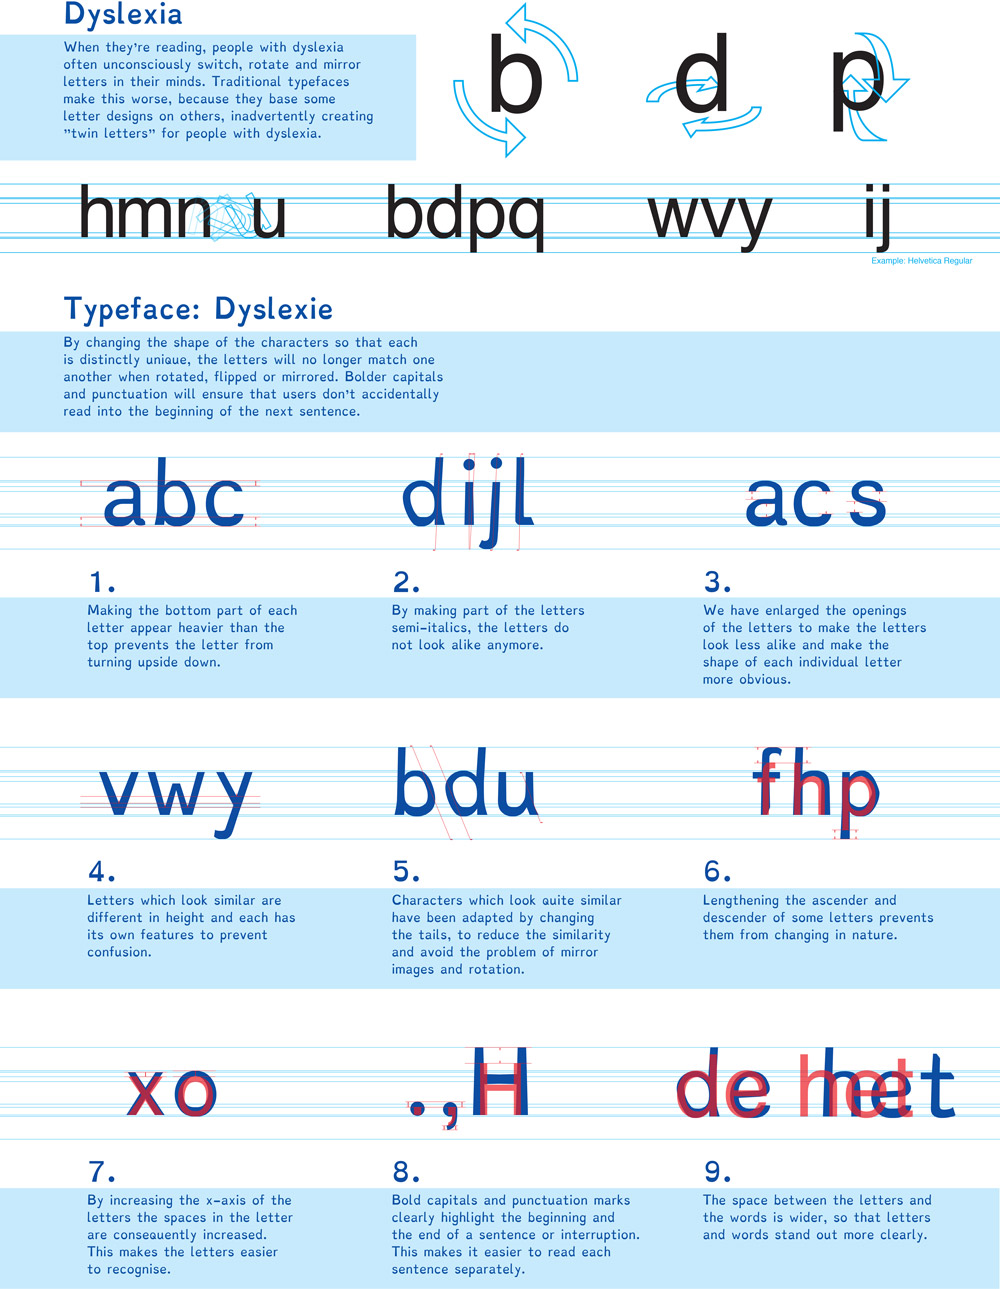 Dyslexie-typeface-by-Christian-Boer-dezeen_468_2_1000.jpg